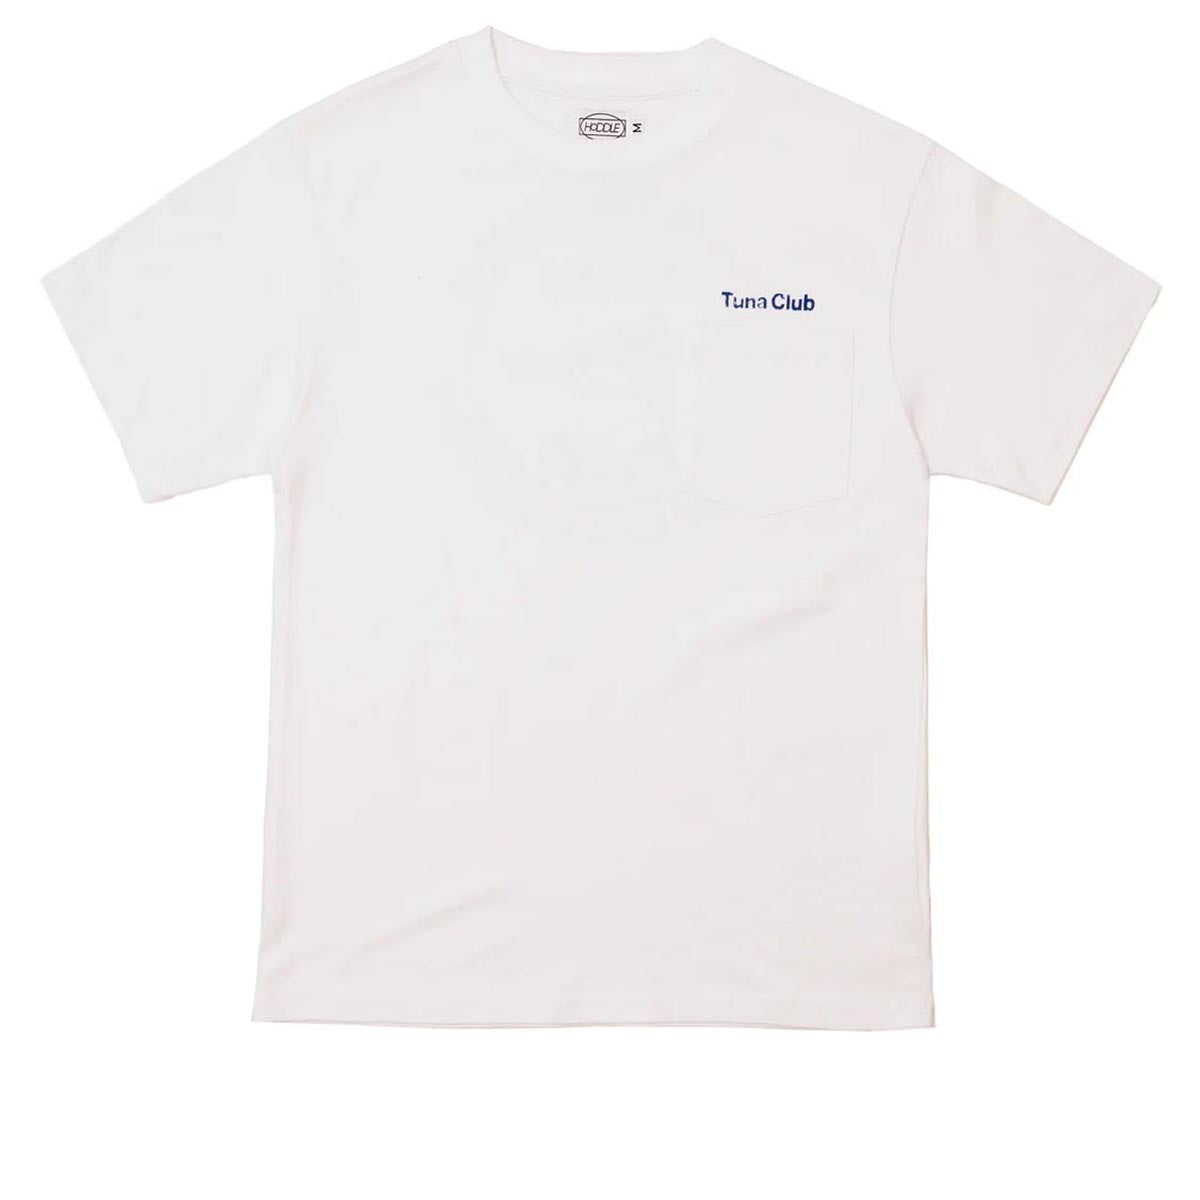 Hoddle Tuna Club T-Shirt - White image 2